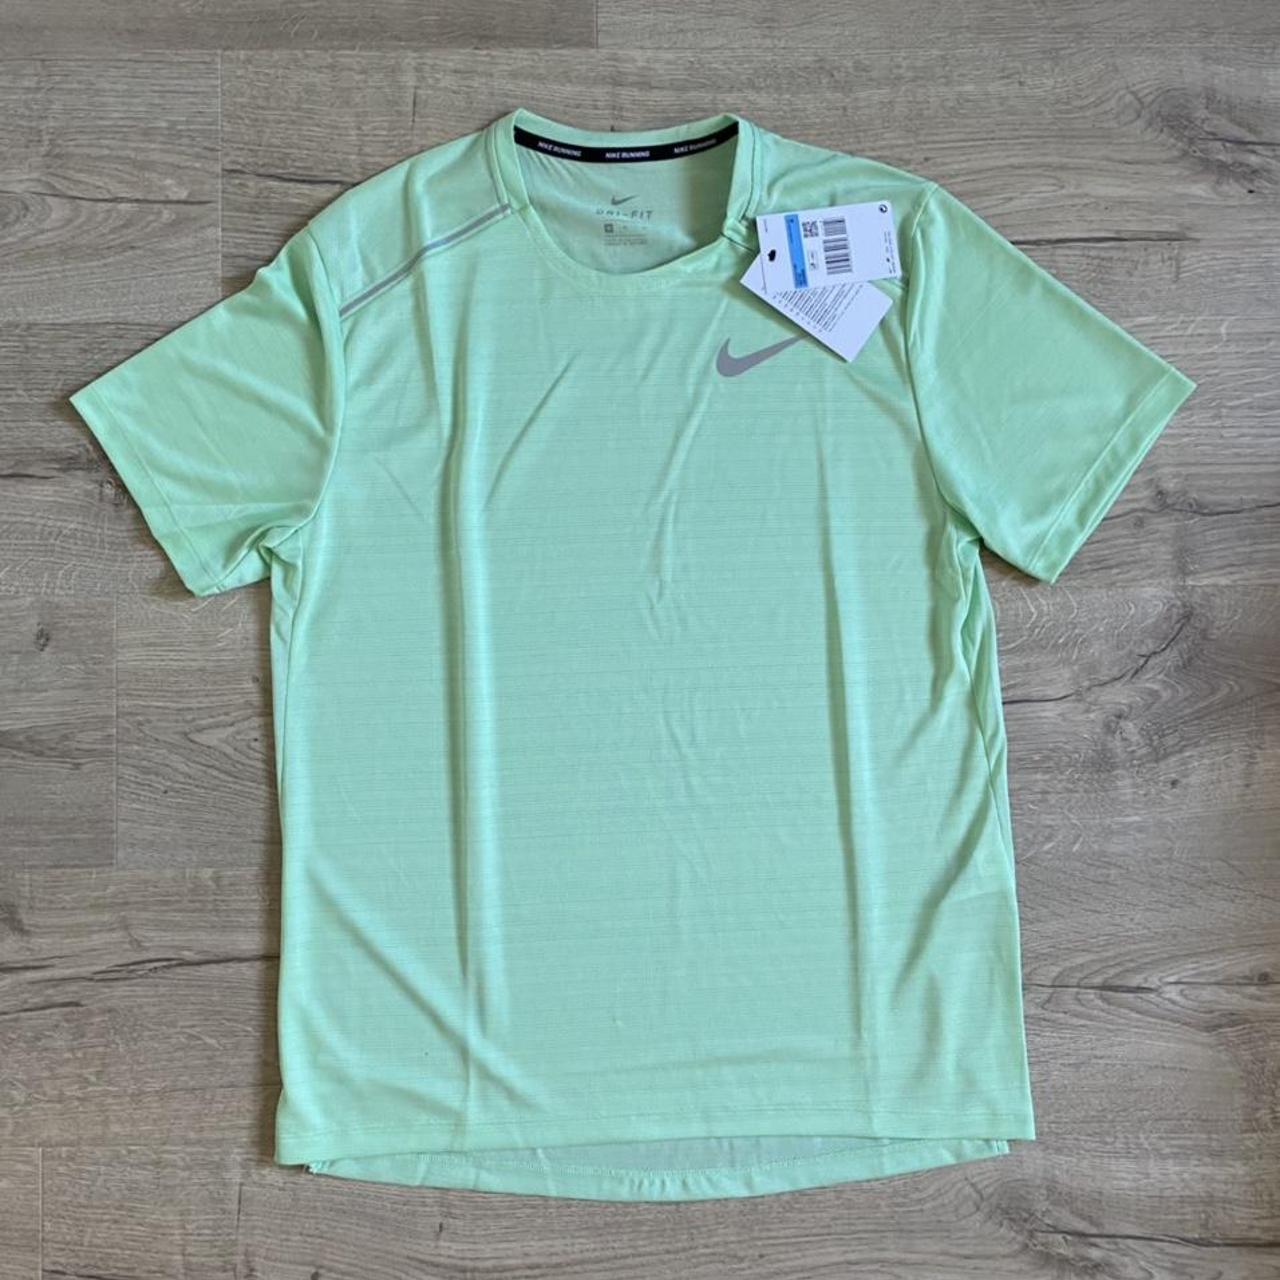 Product Image 2 - Nike Teal Running T Shirt
Item